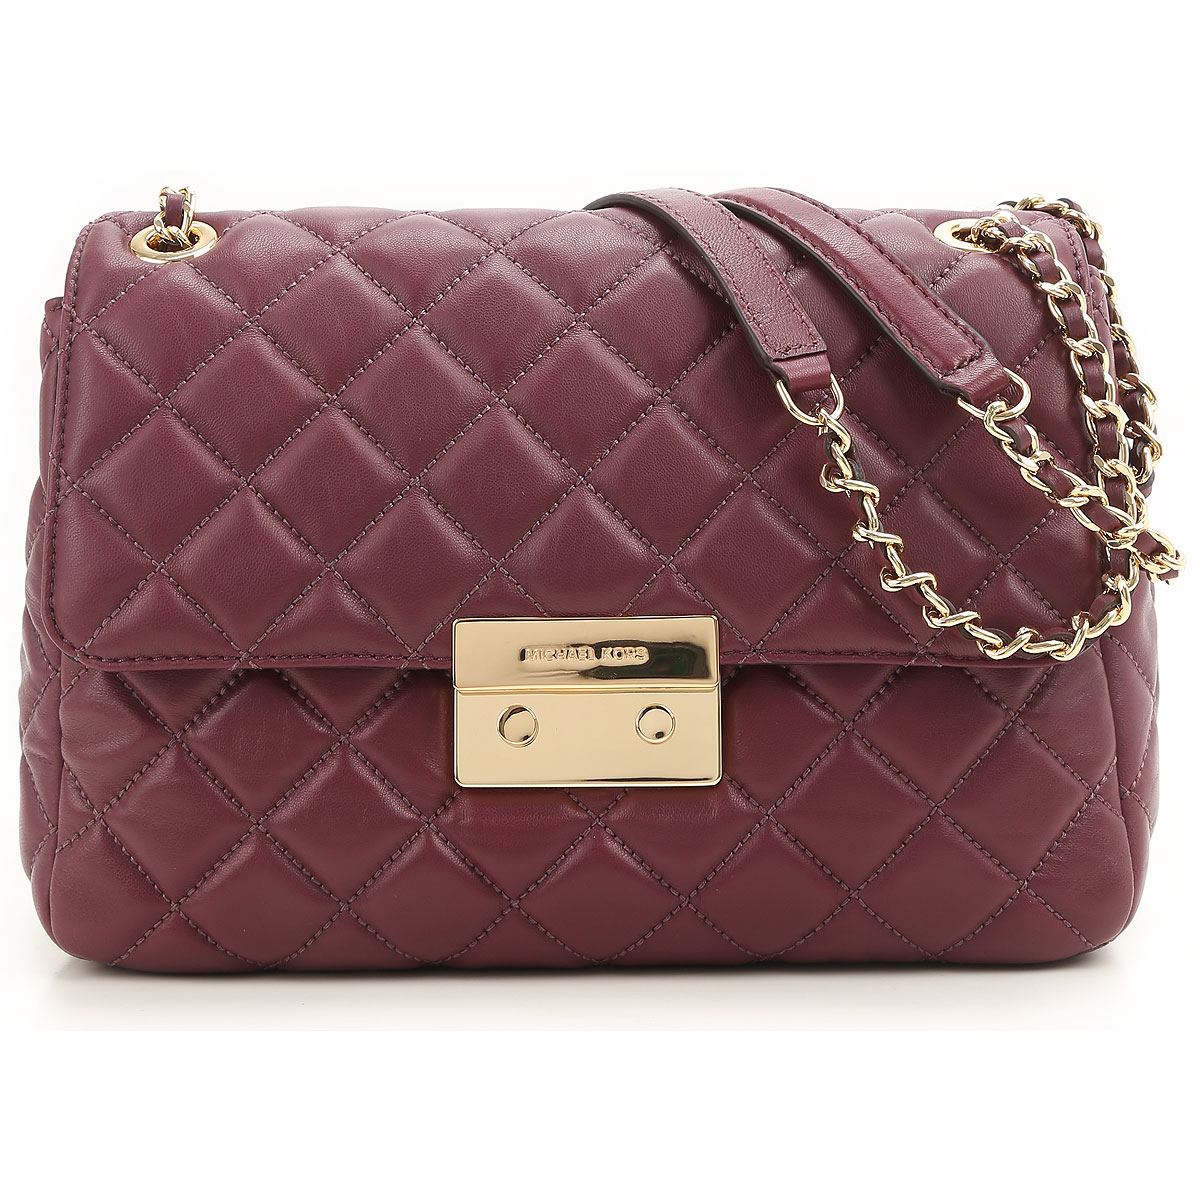 Handbags Michael Kors, Style code: 30t6gsll4l-633-